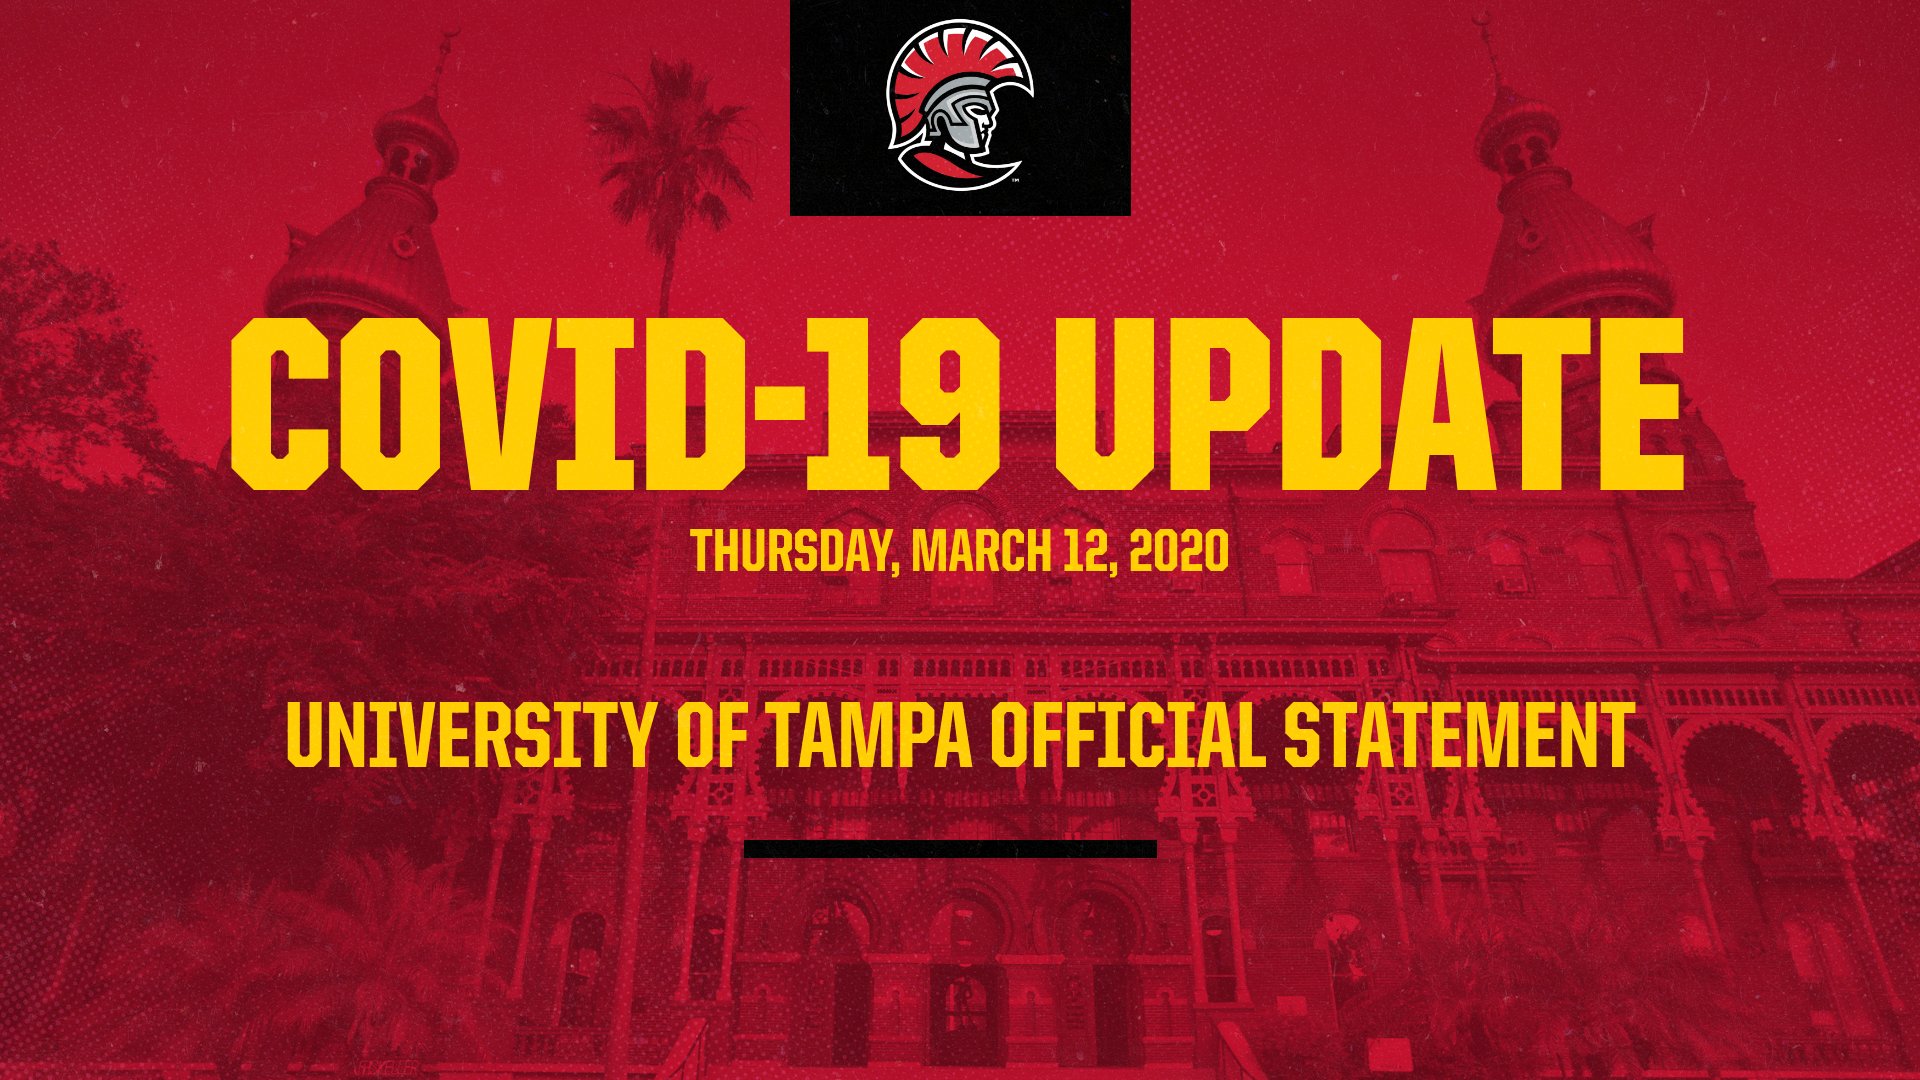 University of Tampa Statement on COVID-19